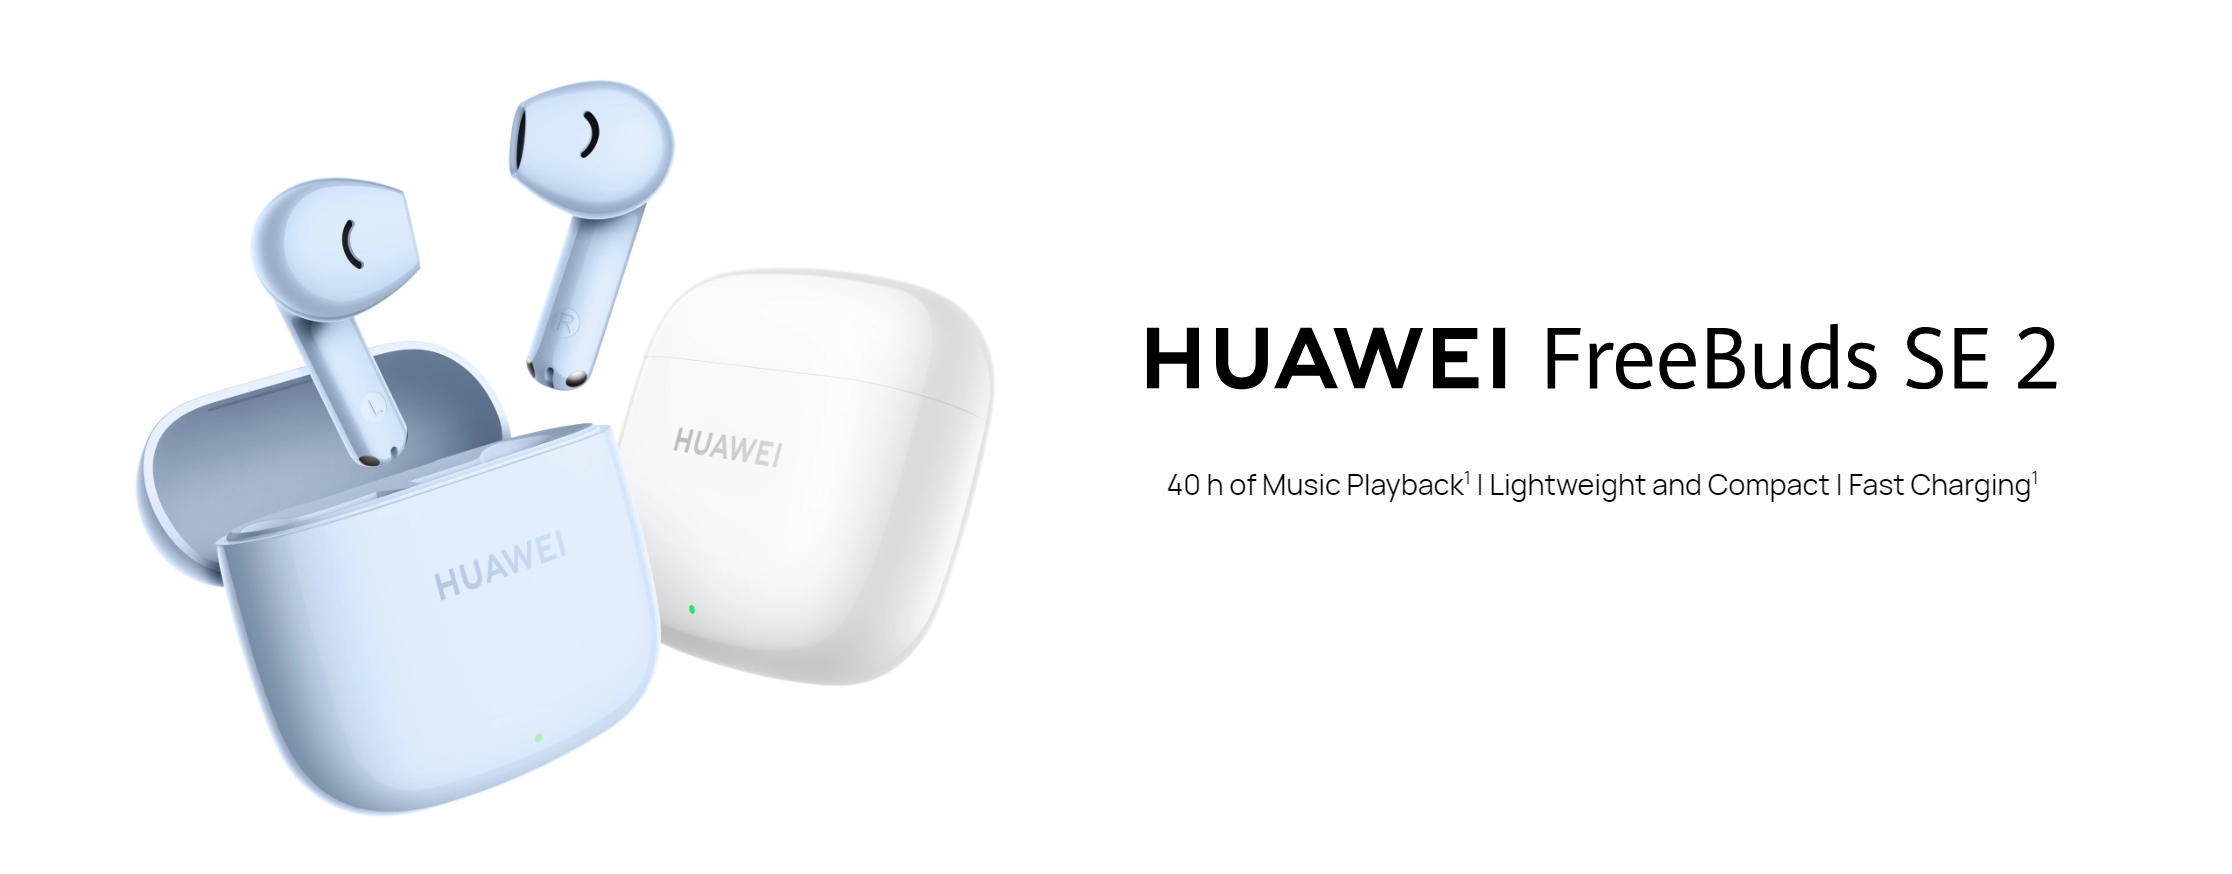 Huawei FreeBuds SE 2 Wireless Bluetooth Headset